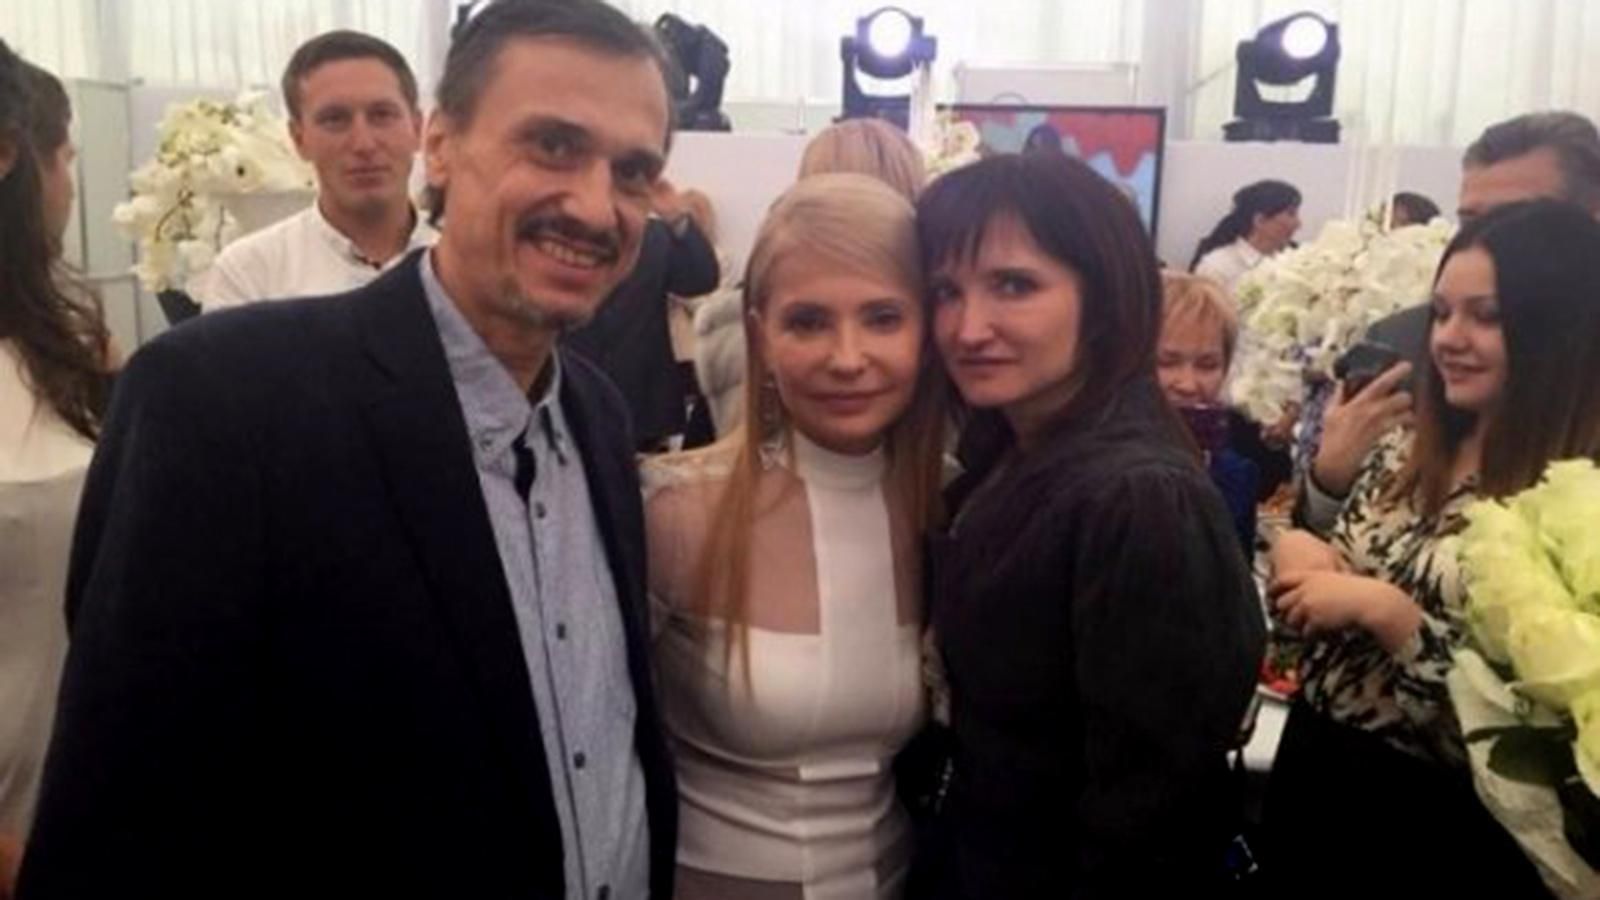 Тимошенко отметила юбилей с размахом на 300 тысяч гривен